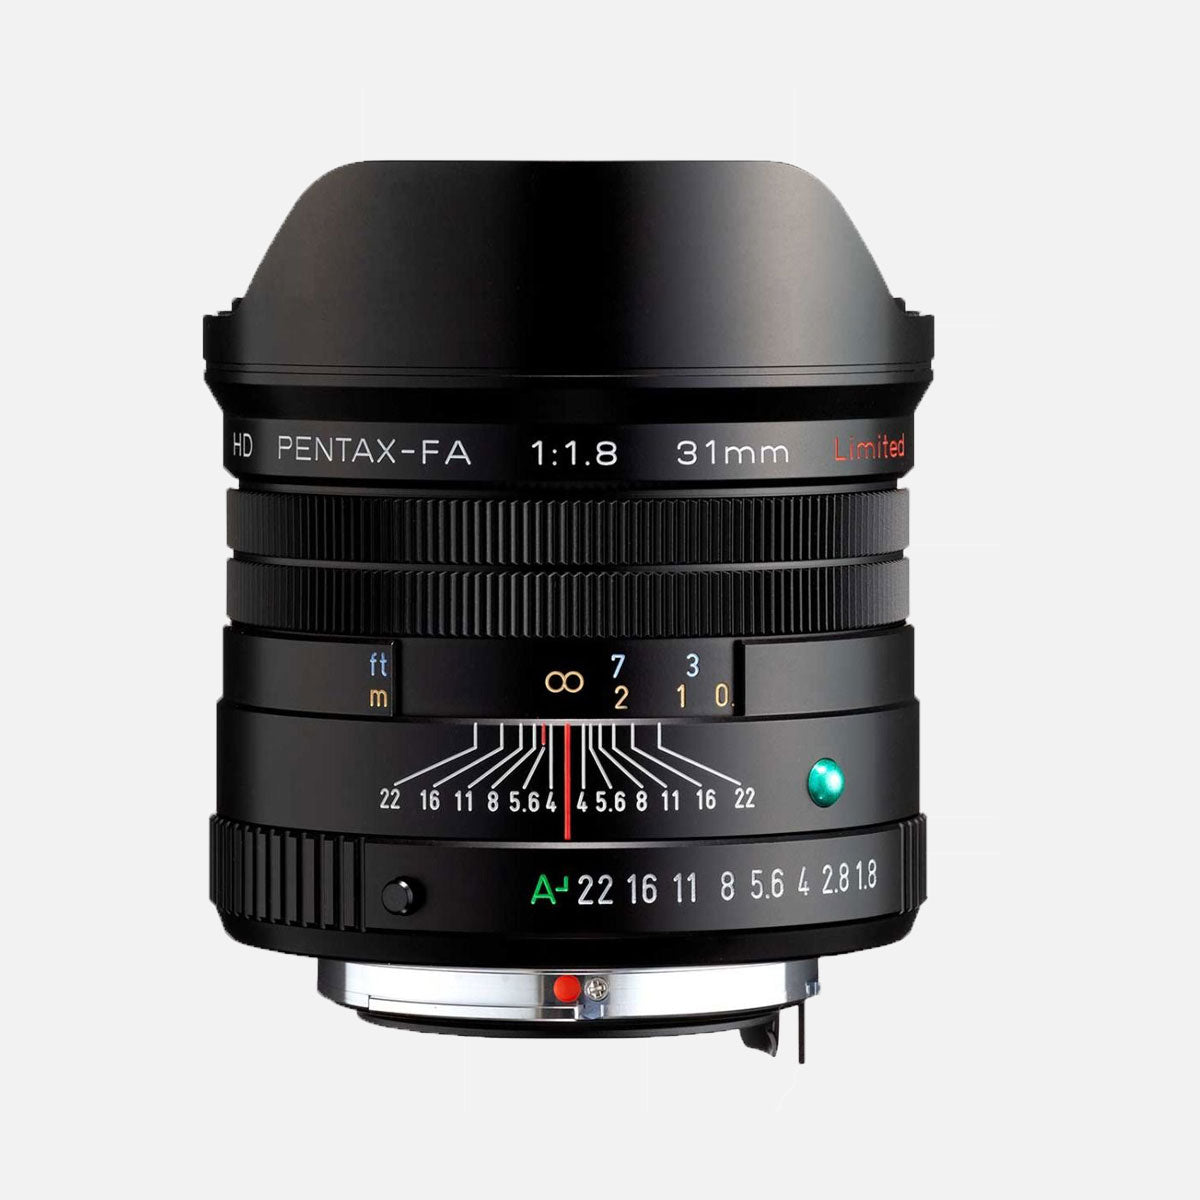 PENTAX Full Frame Lens | HD PENTAX-FA 31mmF1.8 Limited – PENTAX